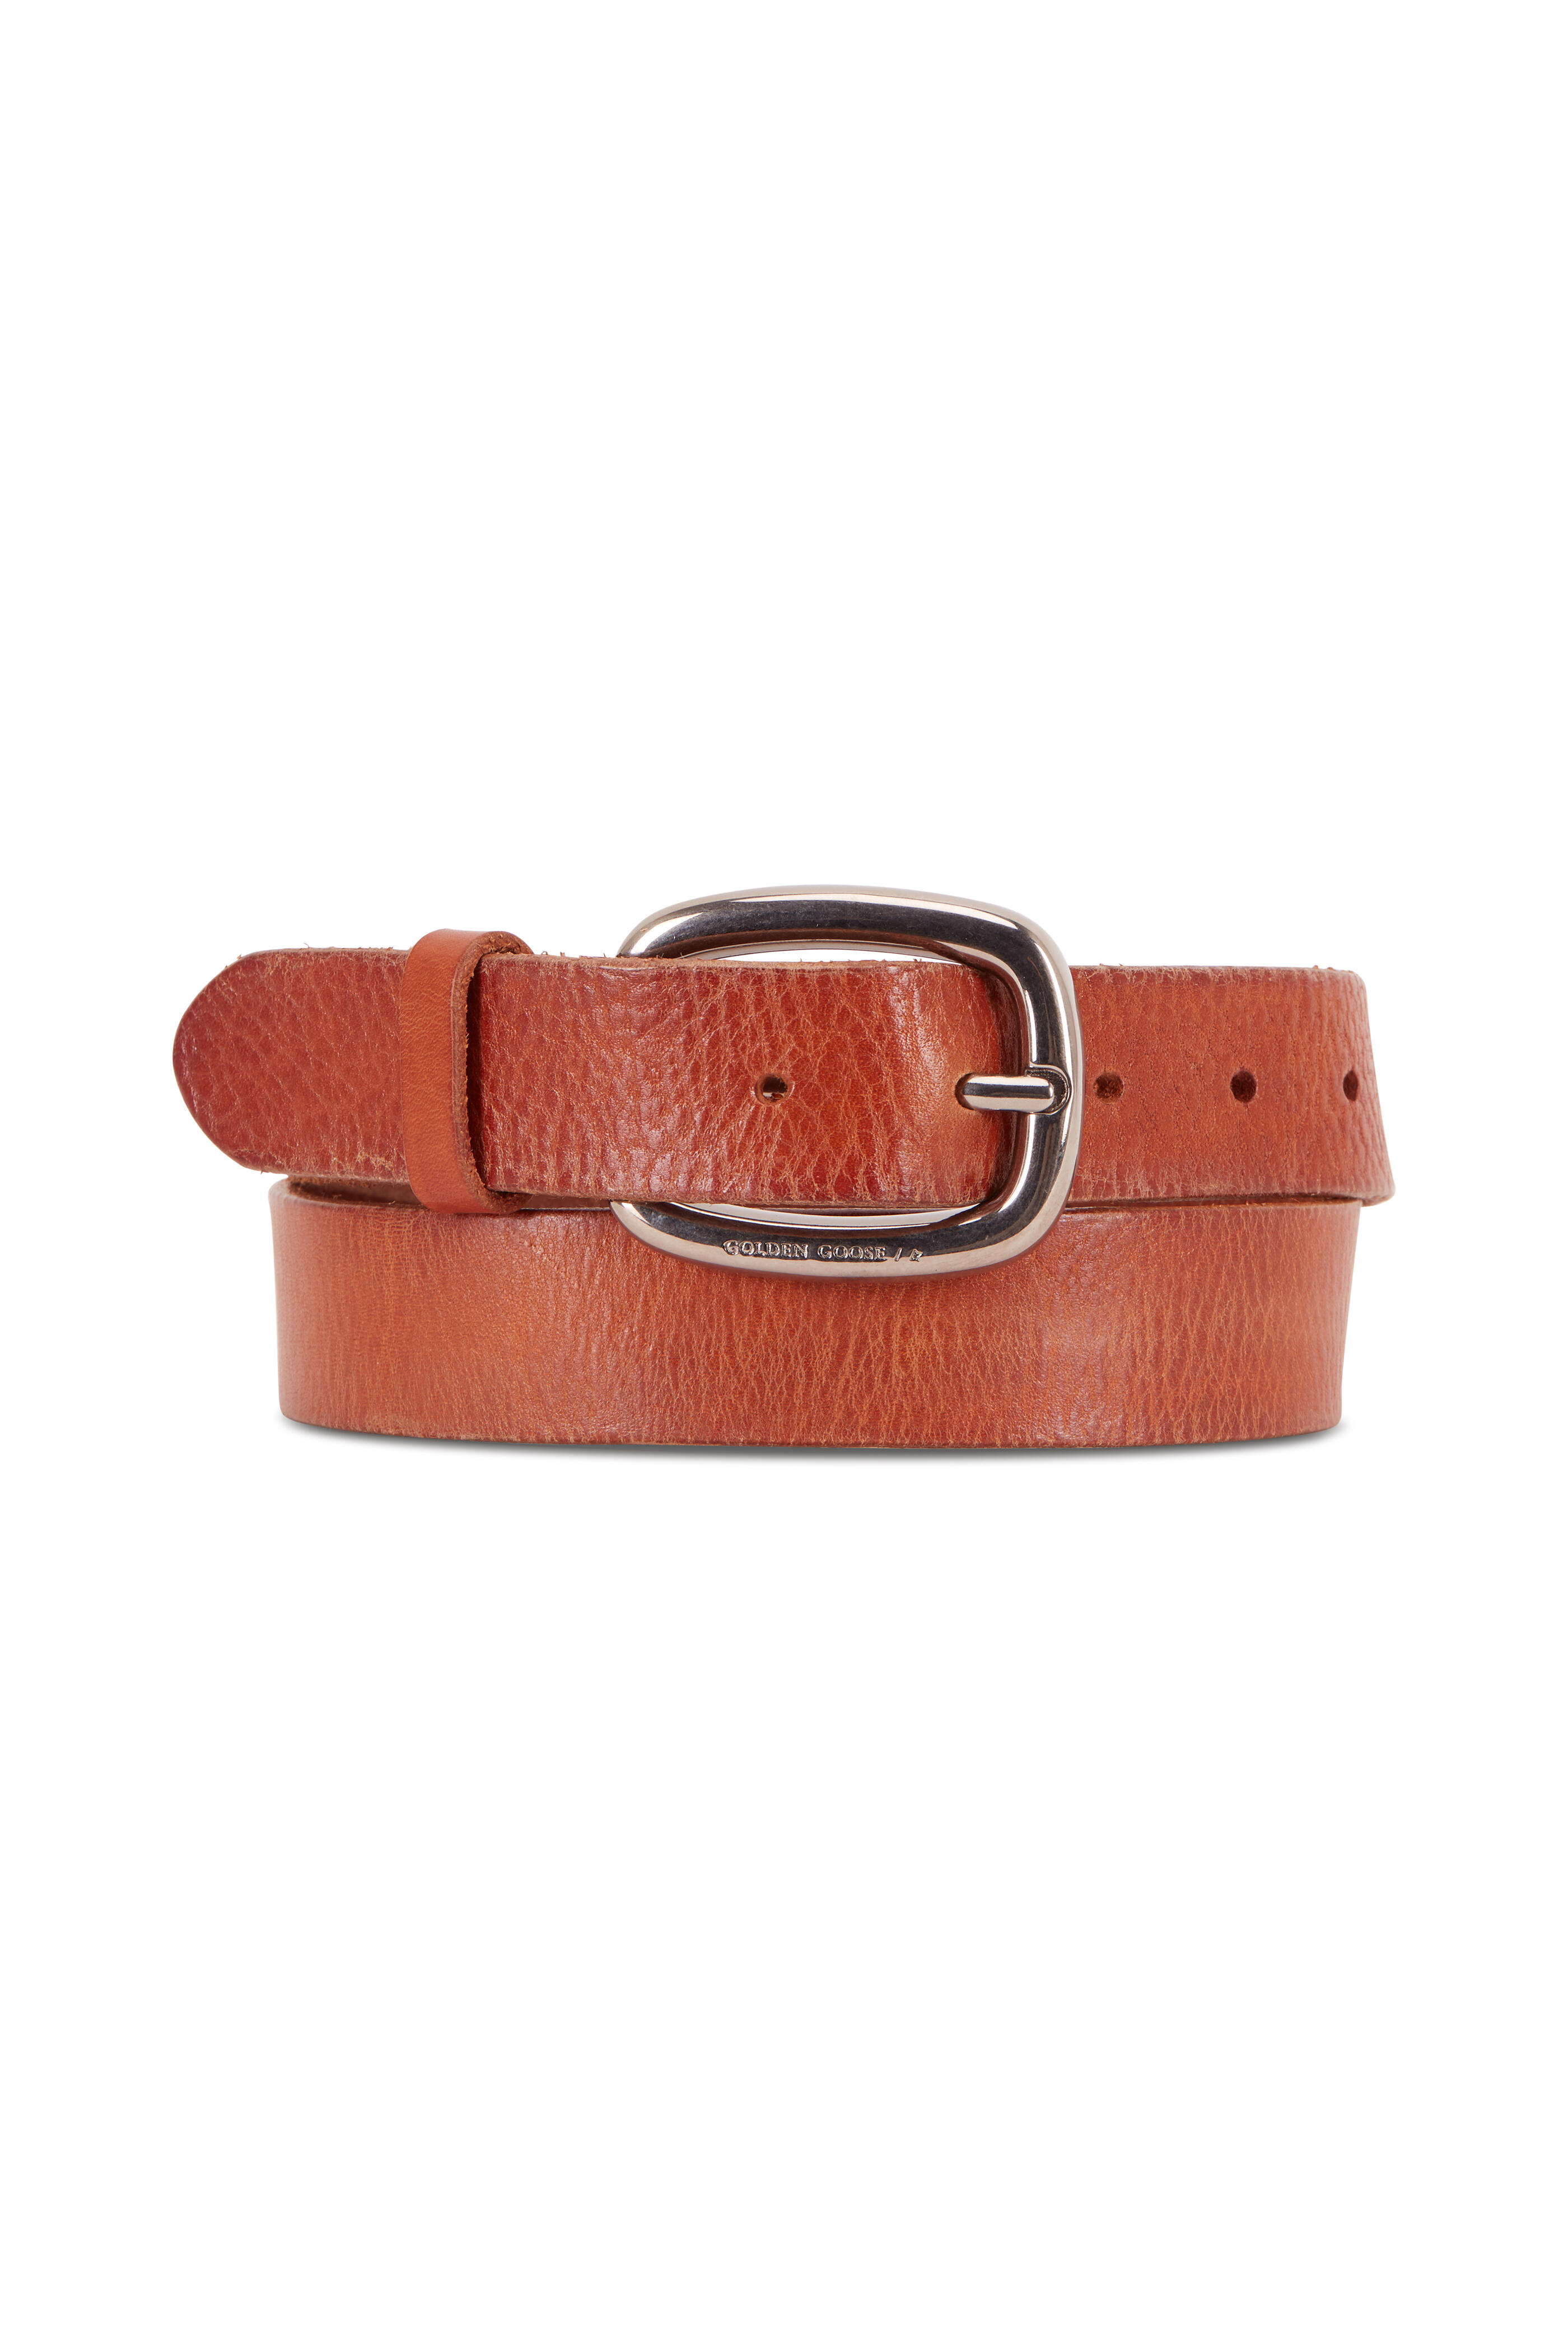 Golden Goose - Houston Cuoio Leather Belt | Mitchell Stores